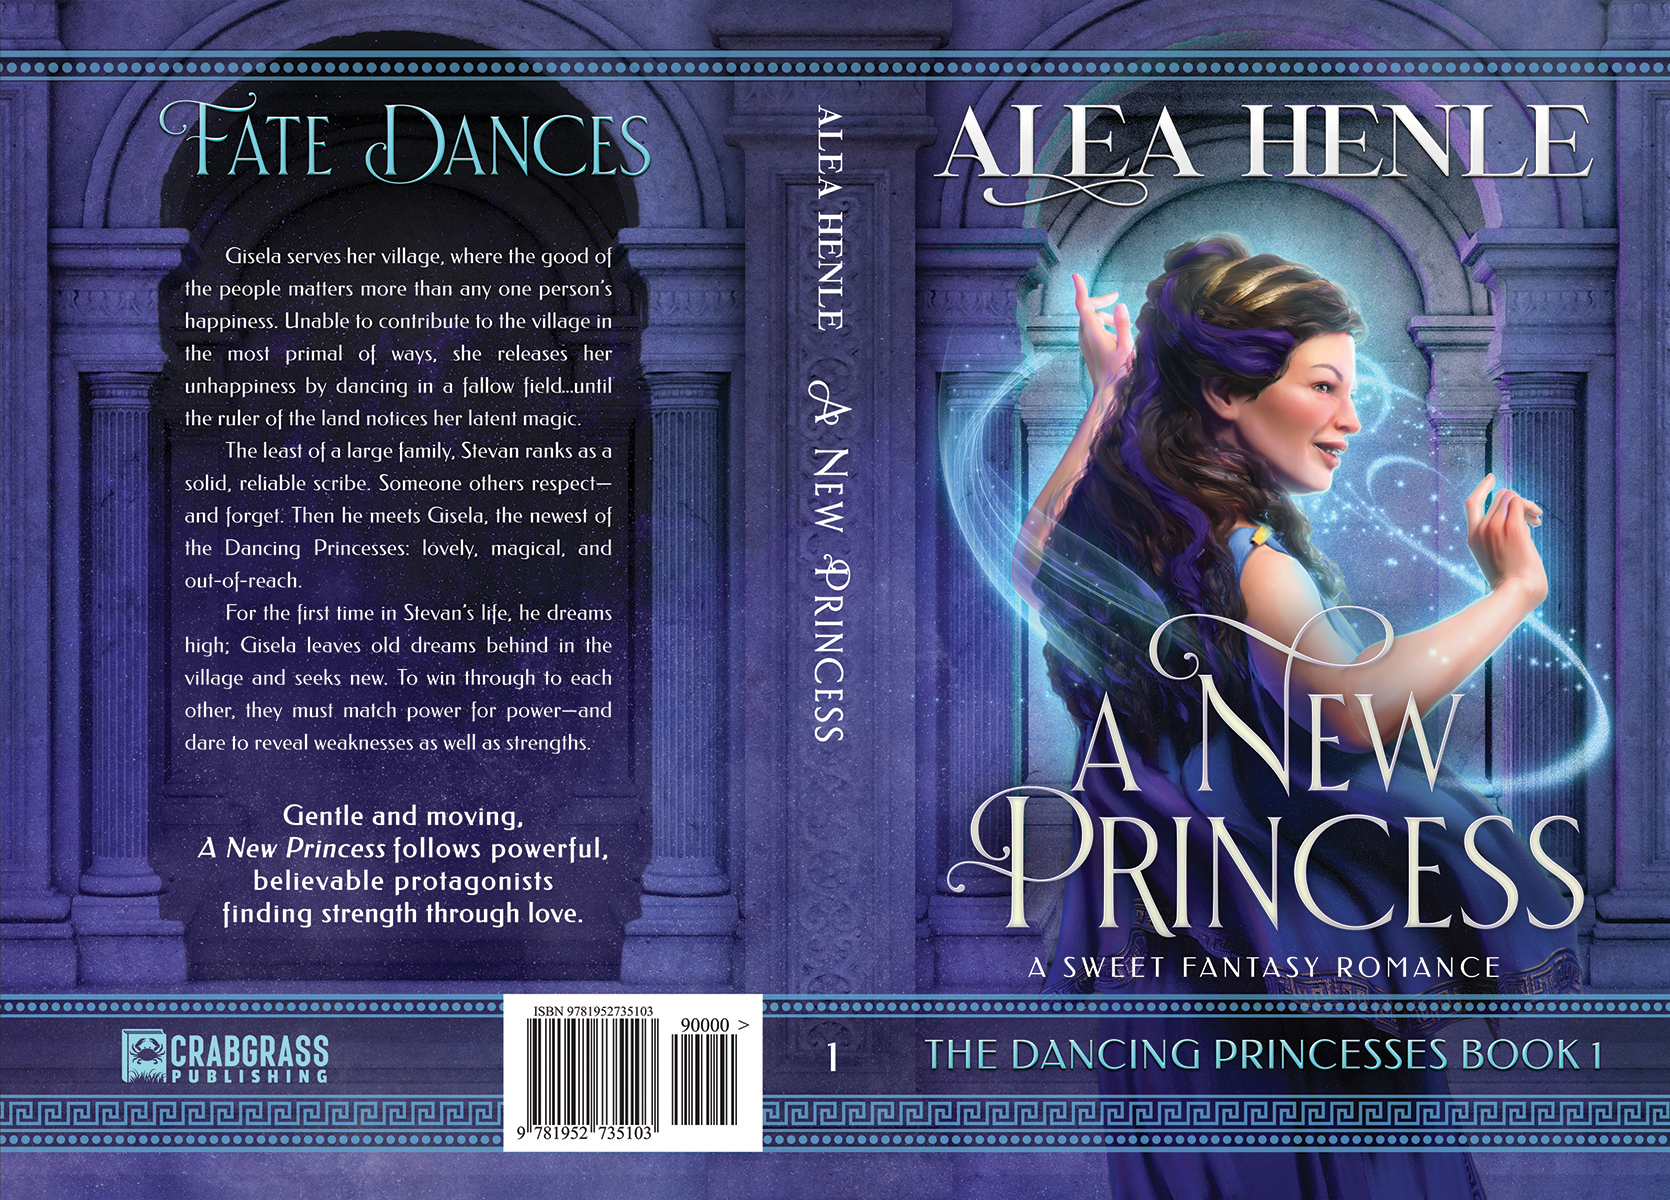 Alea Henle. A New Princess. Paperback.